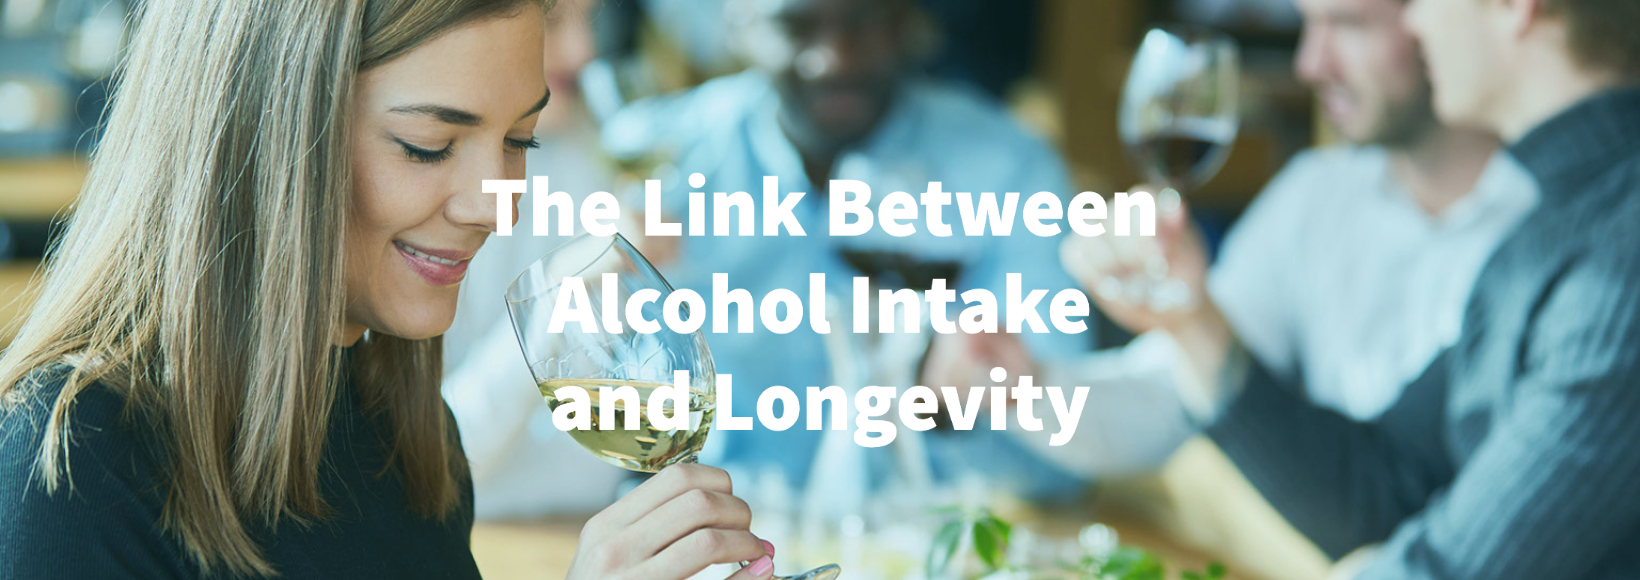 alcohol longevity hdr 1